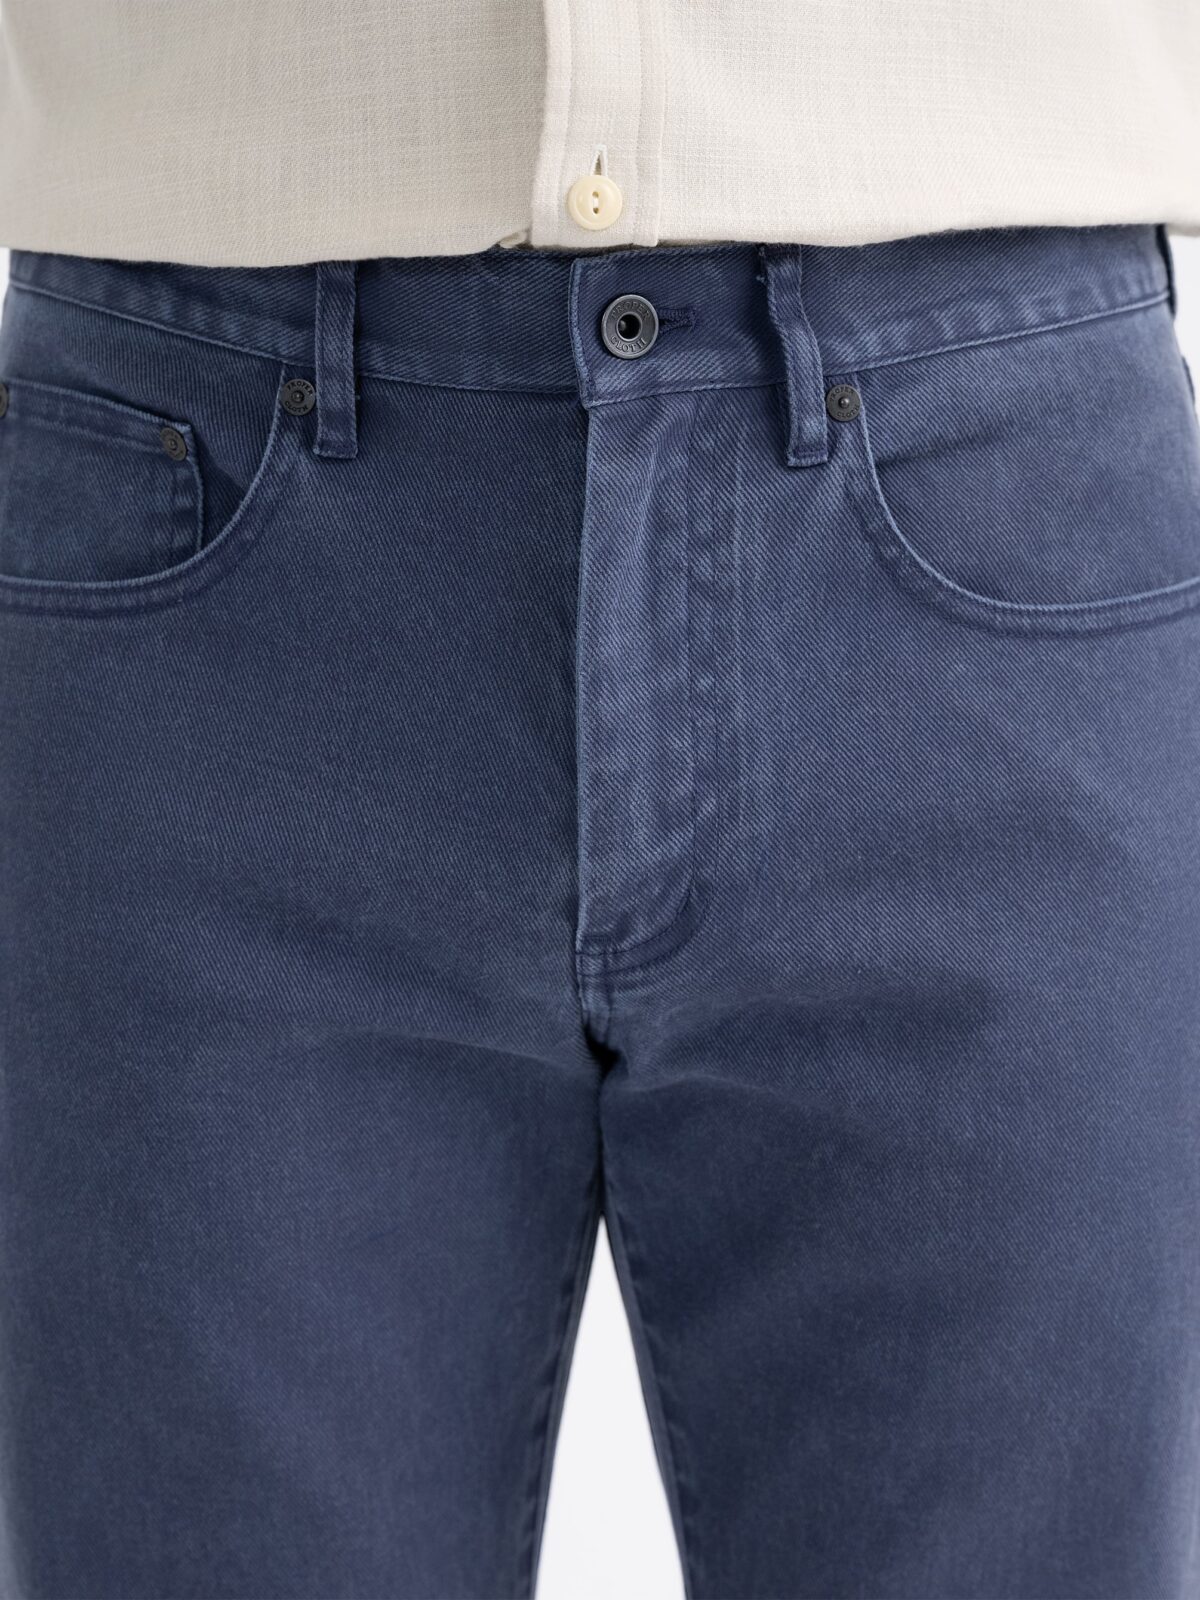 Japanese 14oz Medium Wash Indigo Stretch Jeans